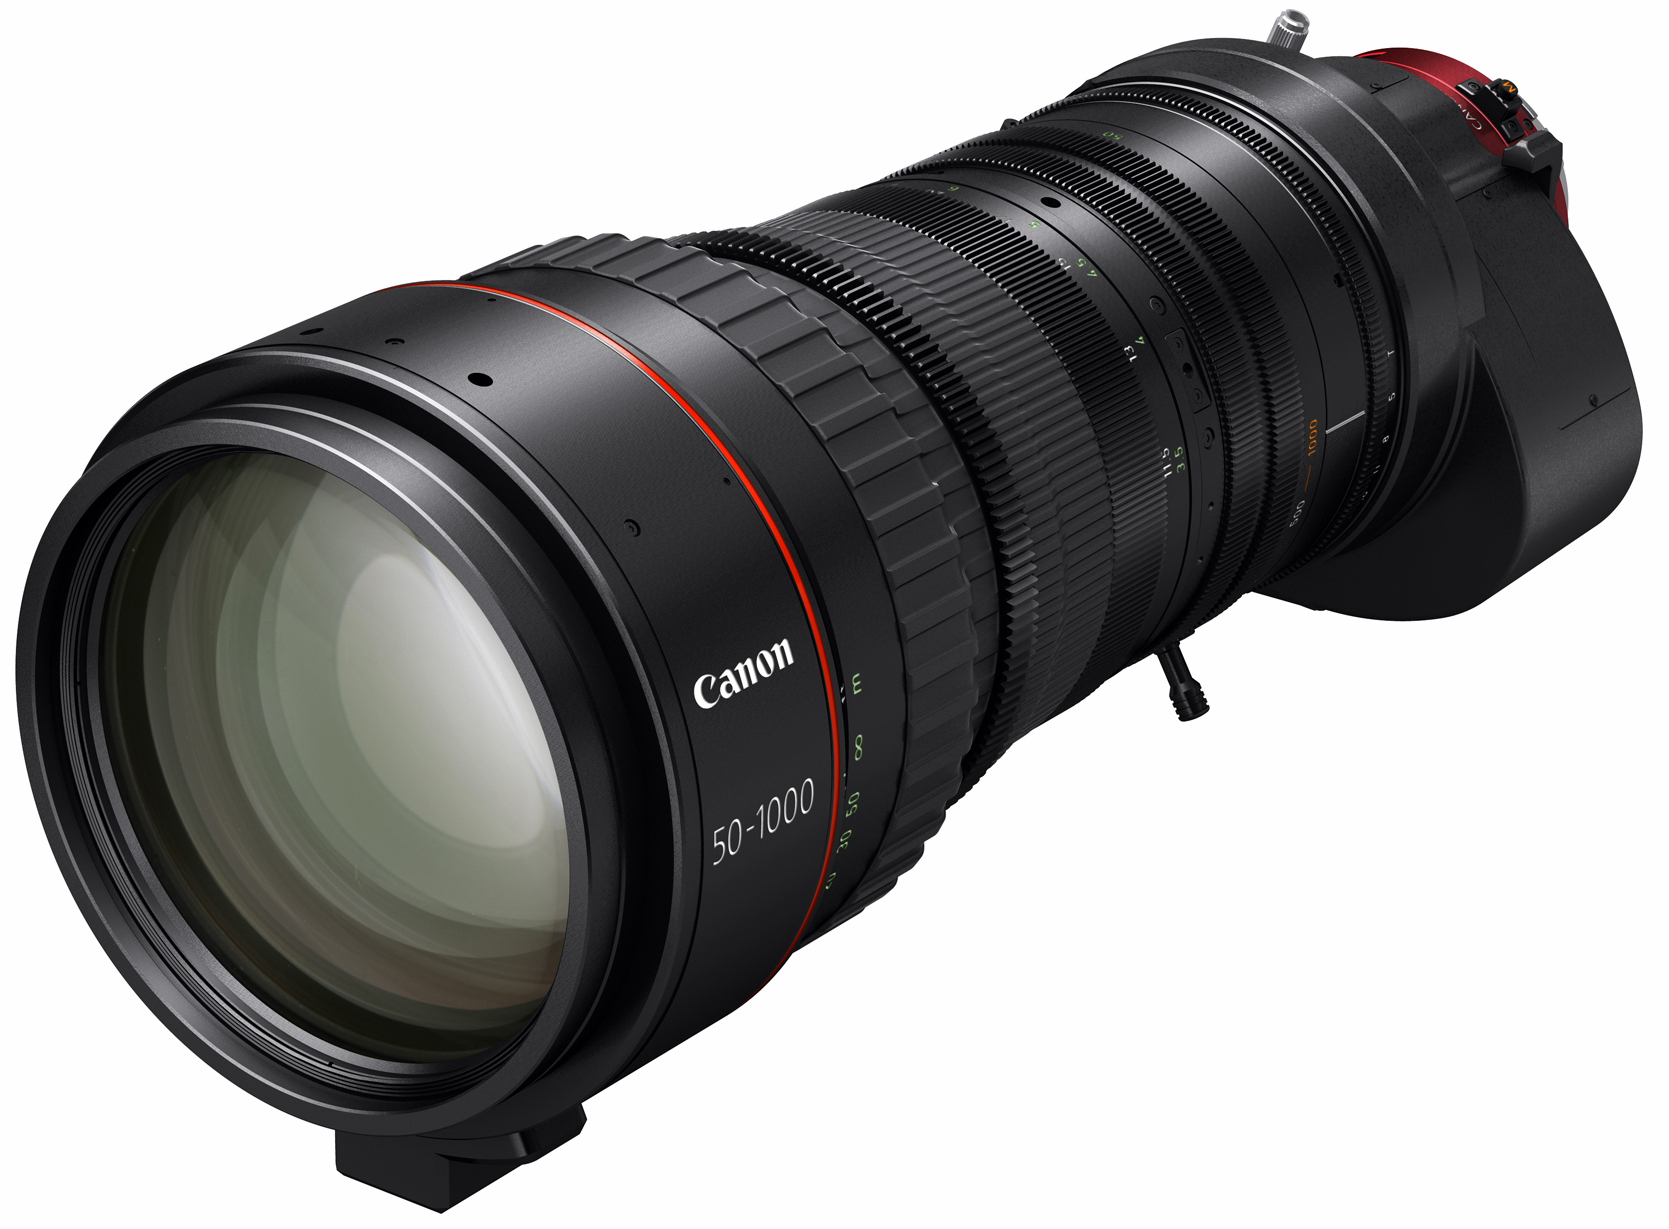 Canon U.S.A. Introduces Ultra-Telephoto CINE-SERVO Zoom Lens